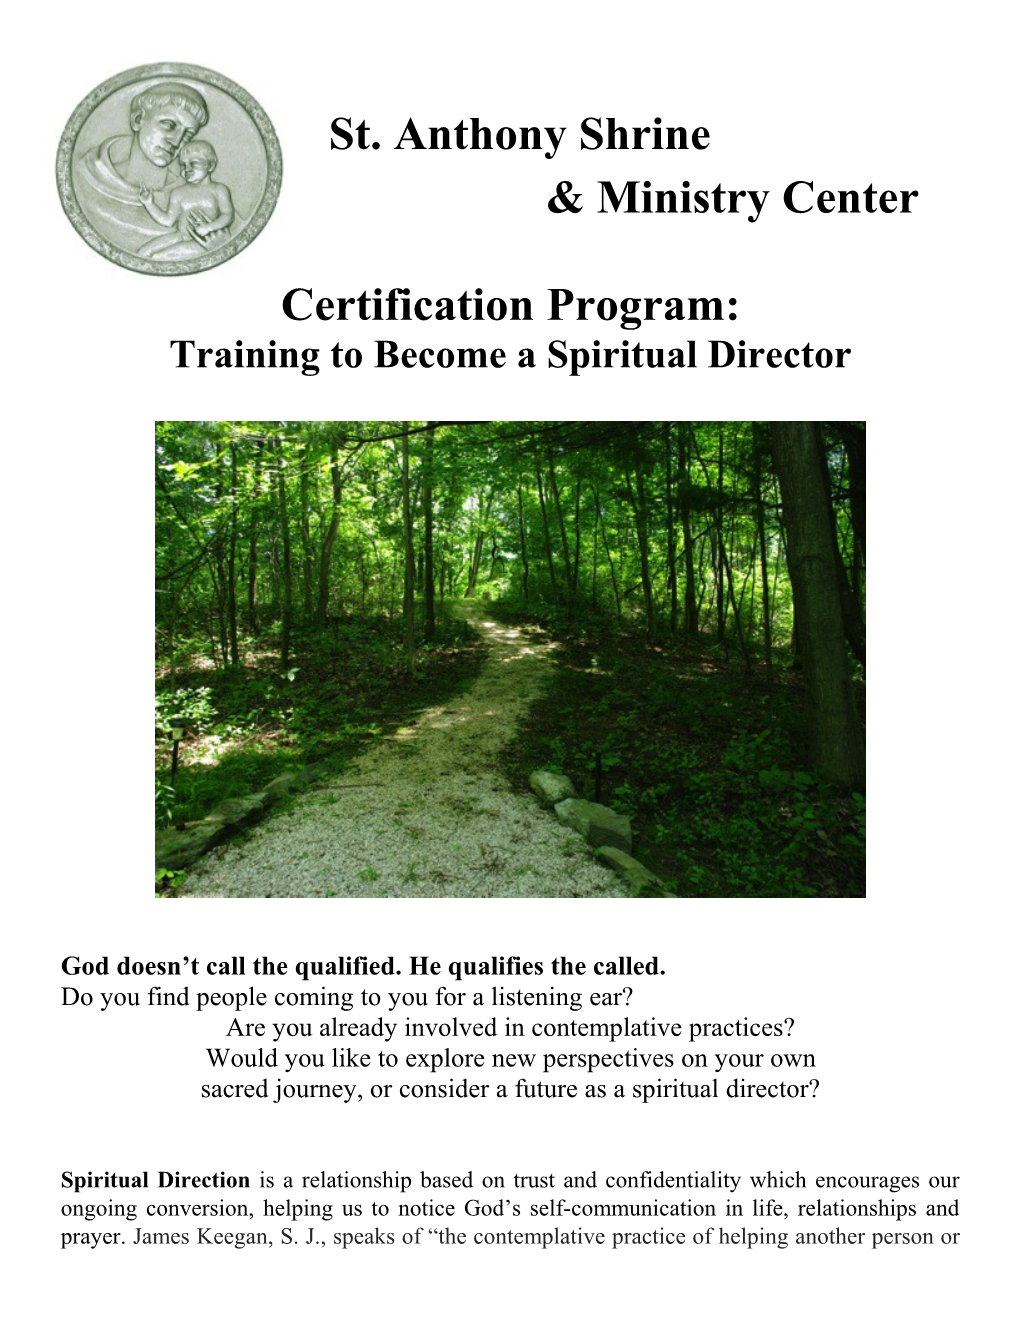 Training to Become a Spiritual Director